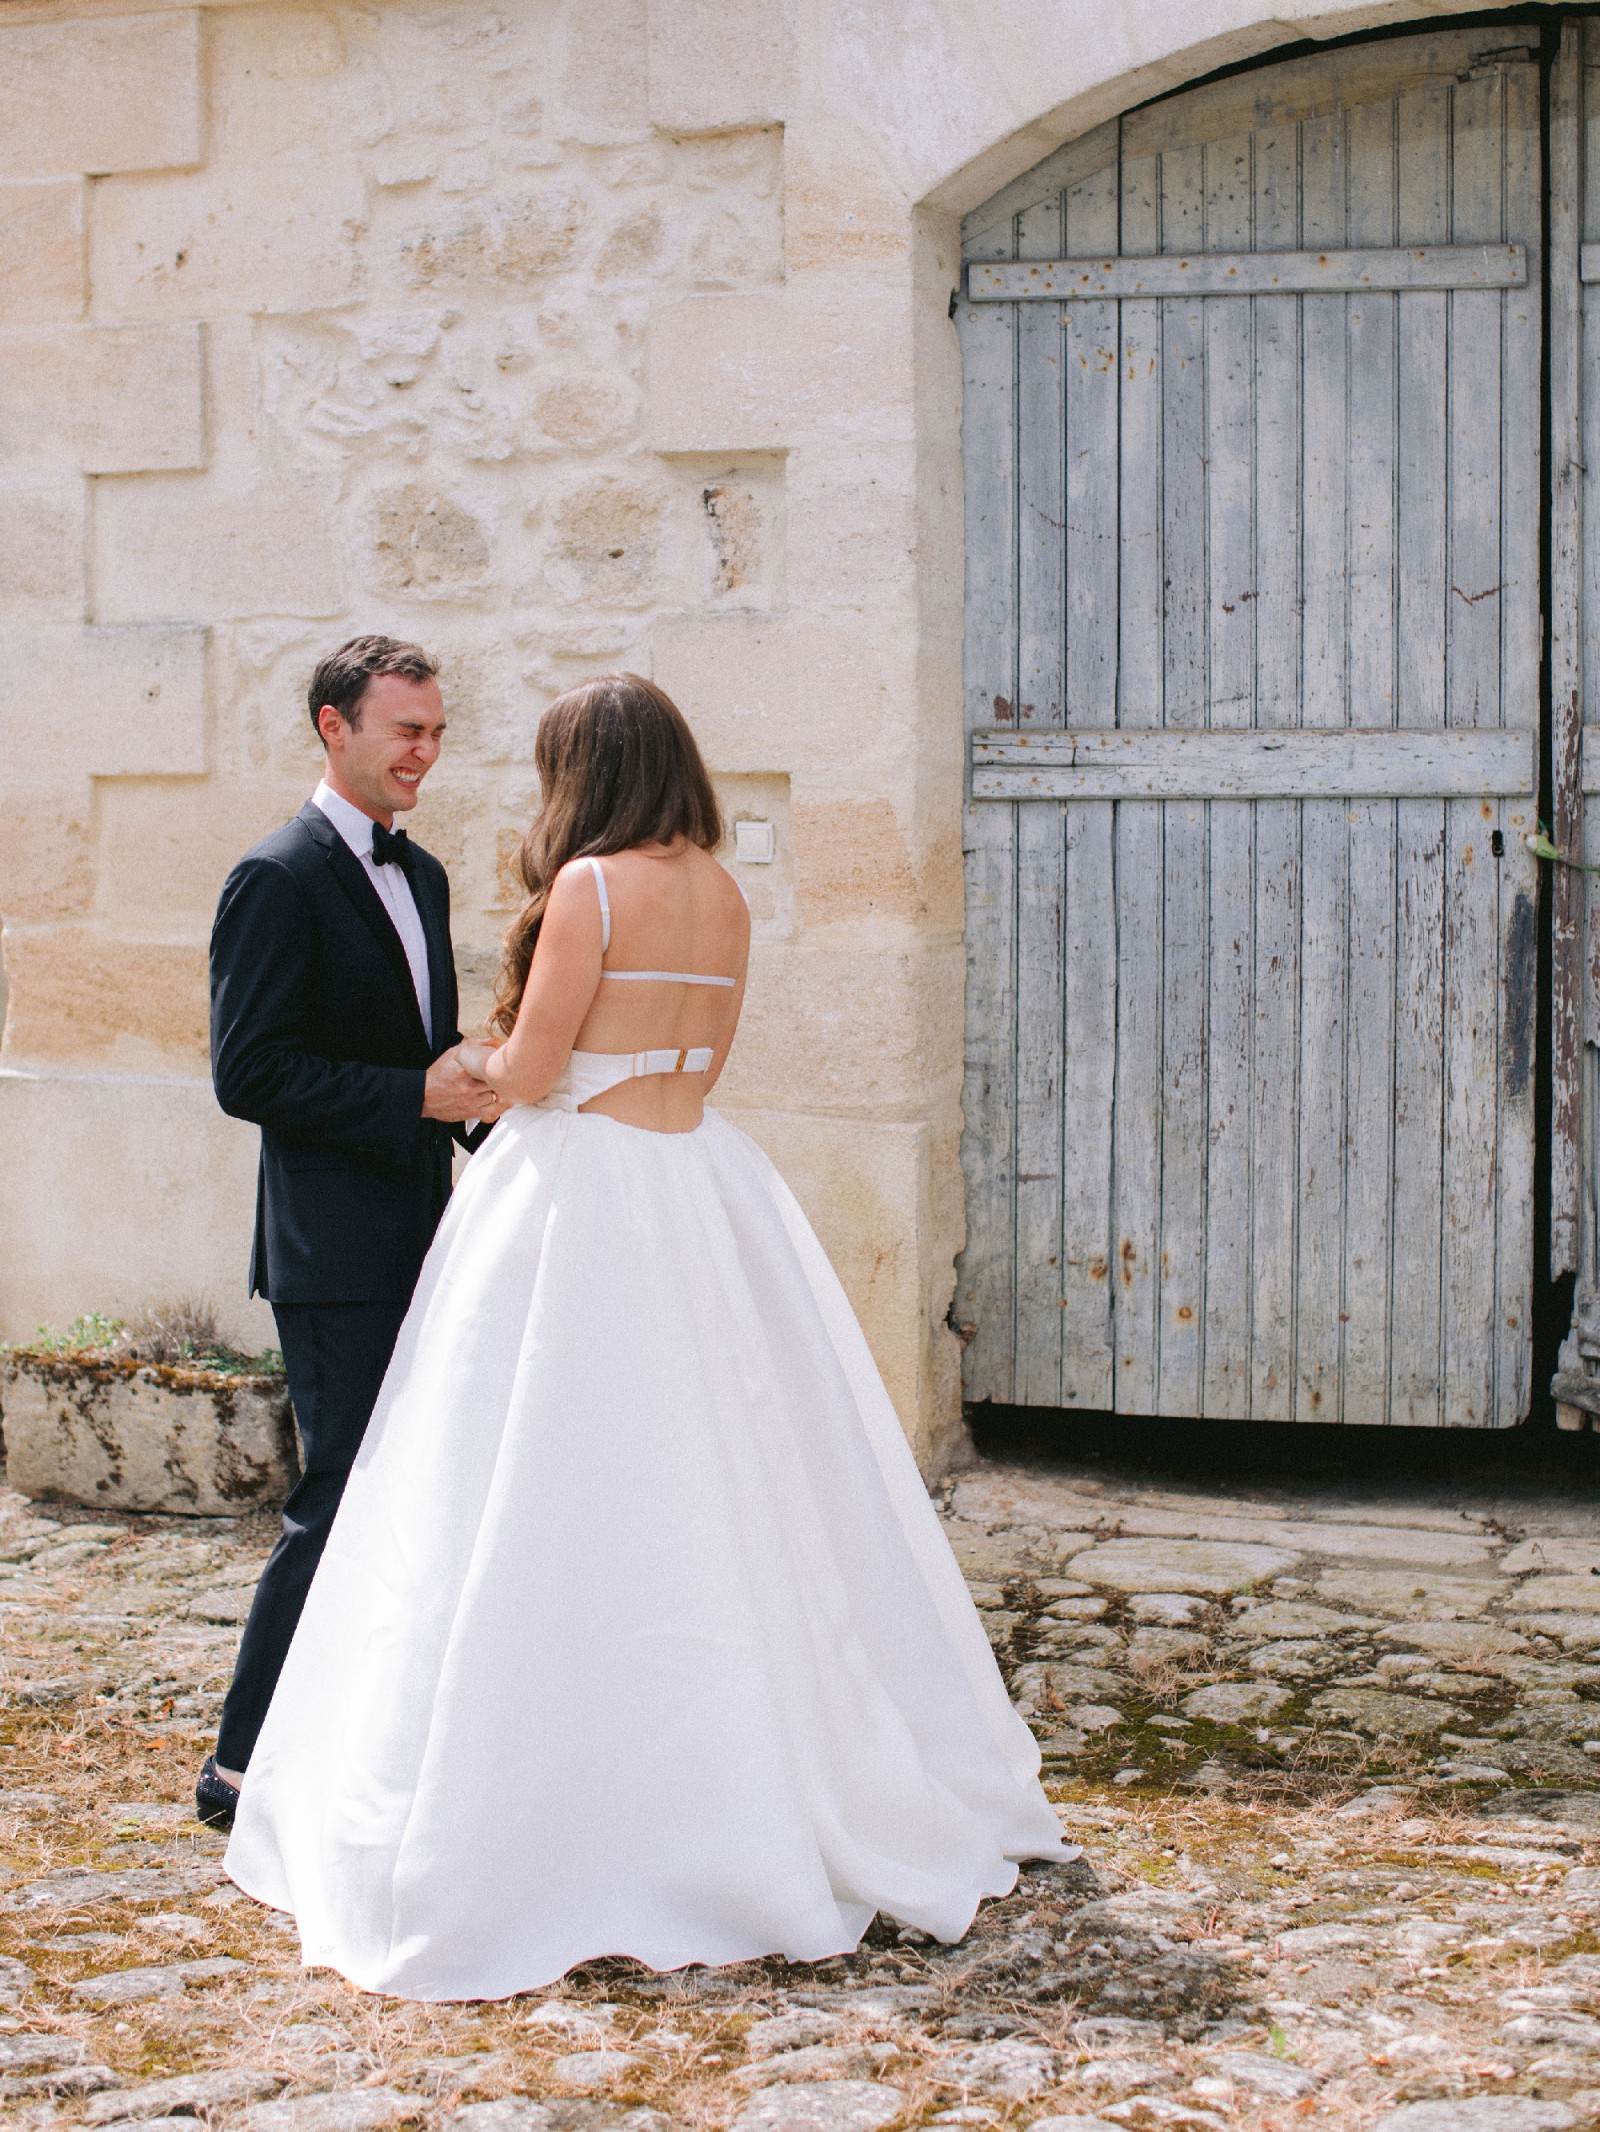 Brandon Maxwell Chiffon Cross Back Gown New Wedding Dress Save 66% -  Stillwhite